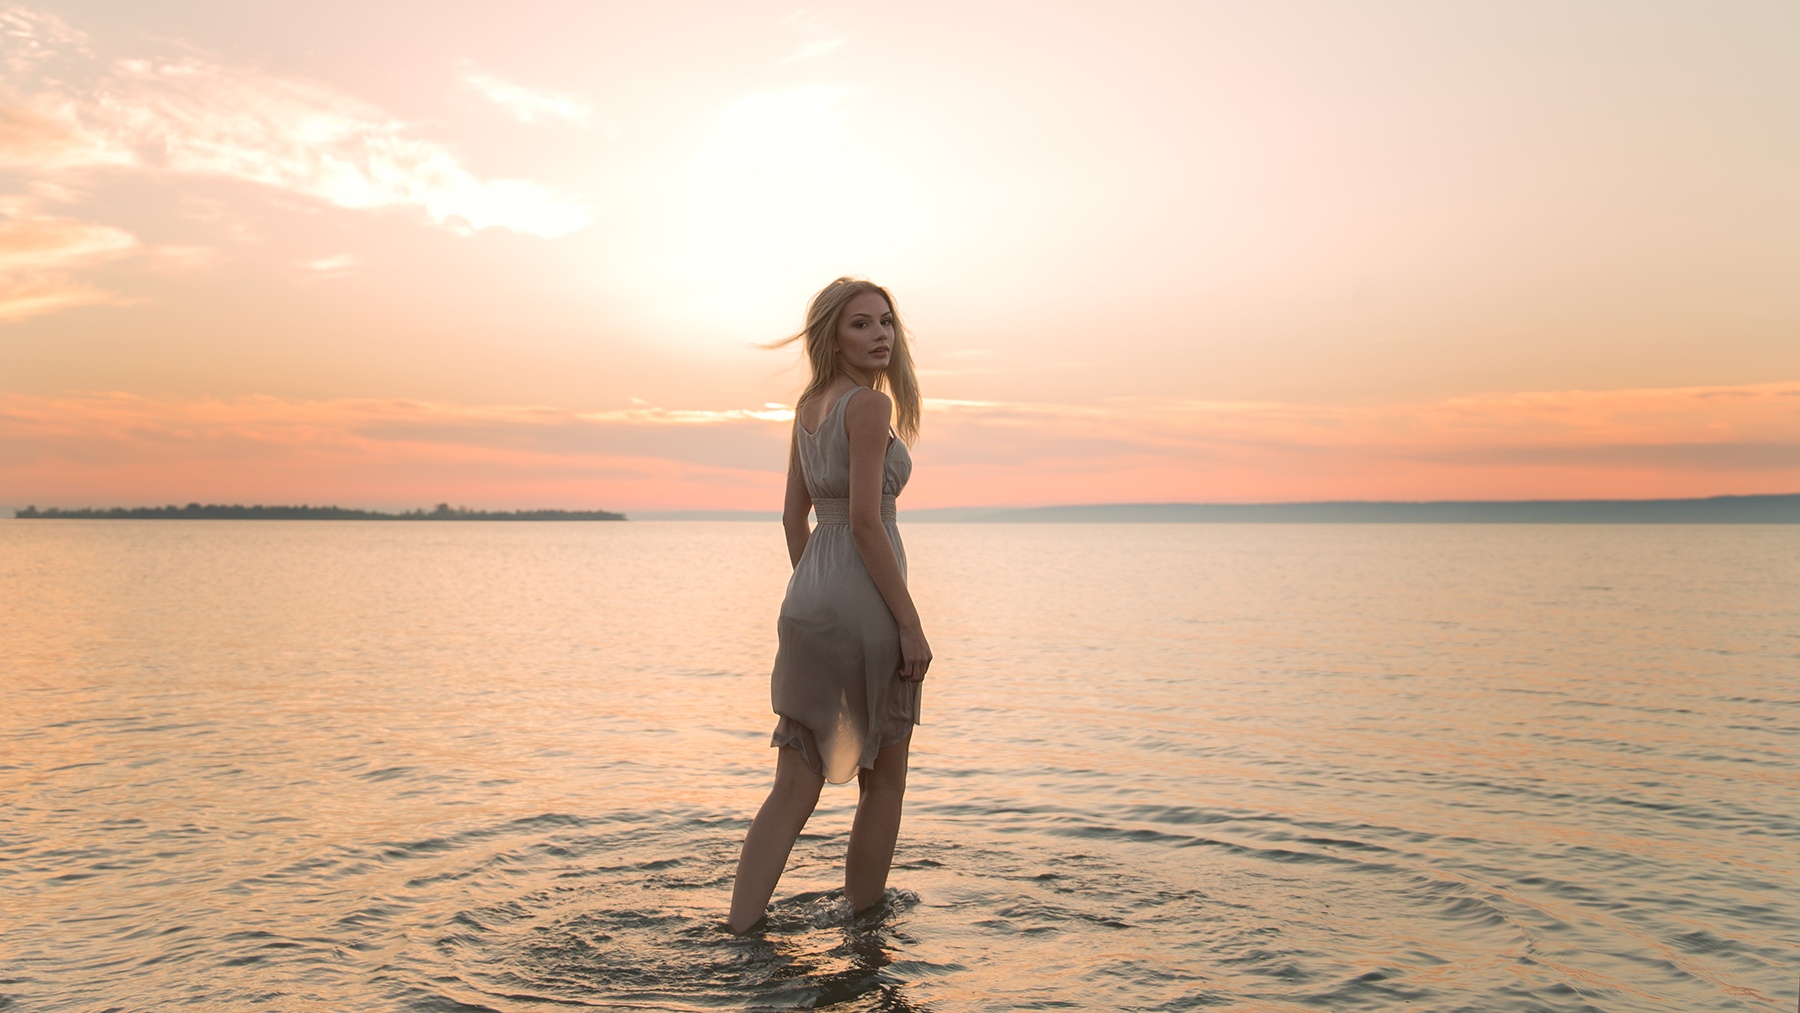 Women Model Blonde Outdoors Portrait In Water Sea Sunset Horizon Dress Looking At Viewer Aleksey Loz 1800x1013